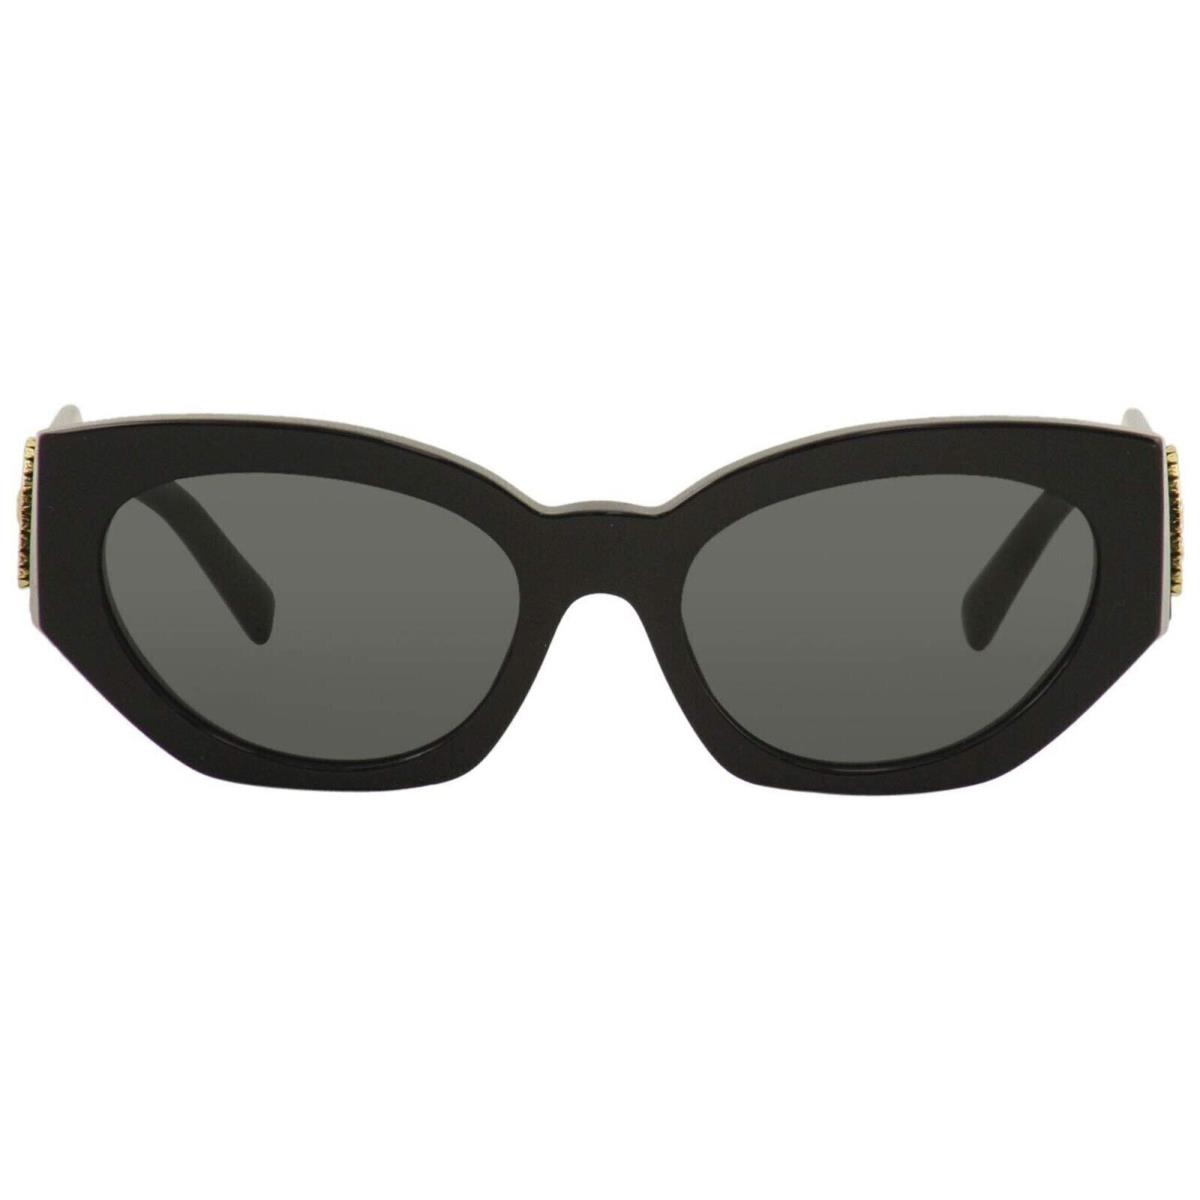 Versace Woman Sunglasses Black Lenses Acetate Frame VE4376/B GB1/87 54mm